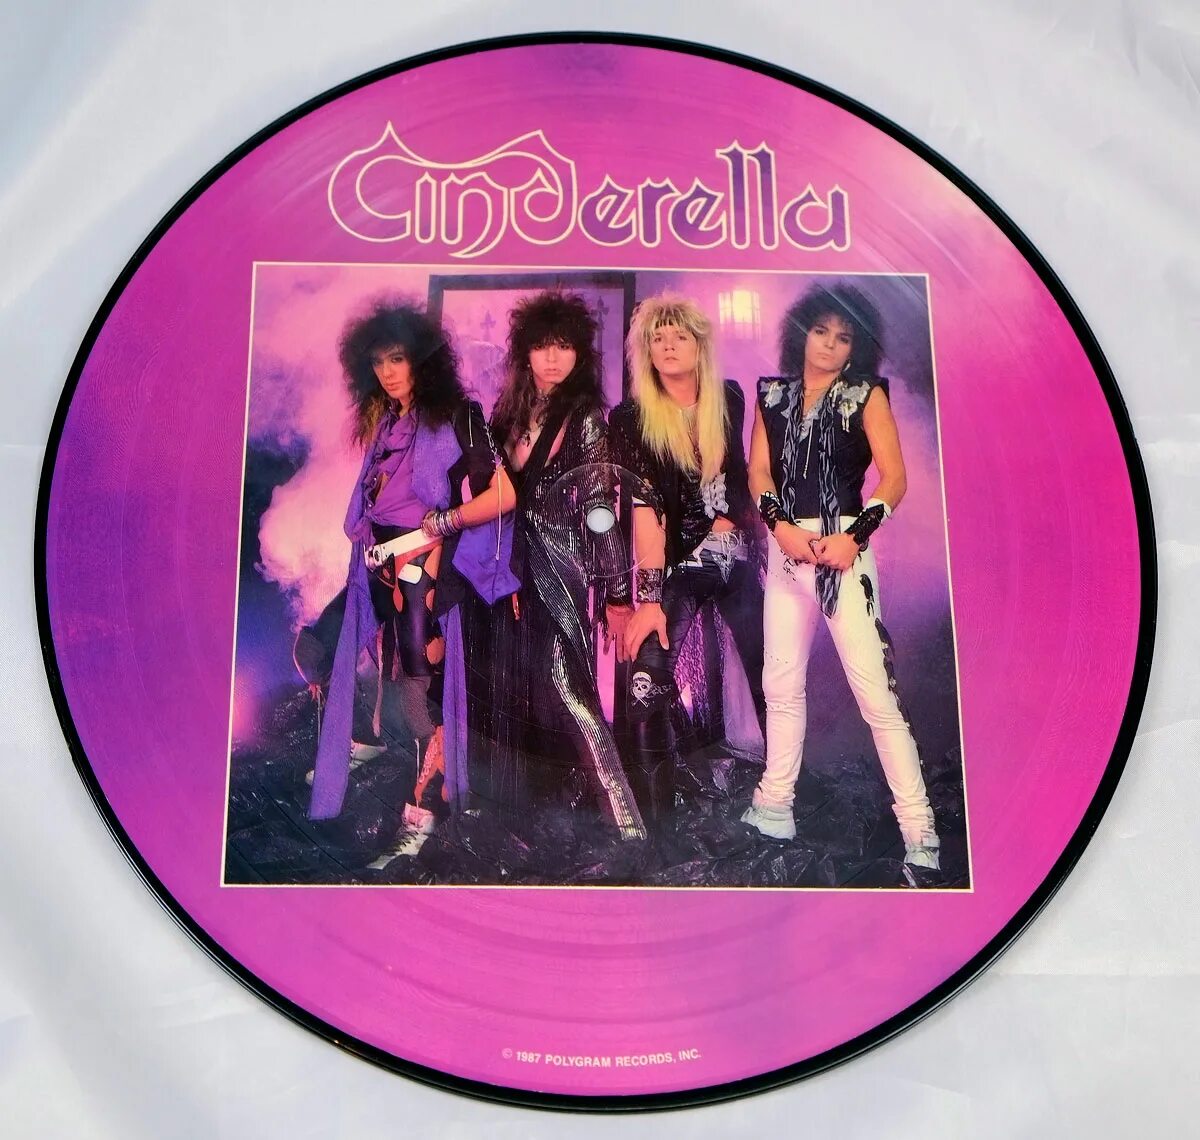 Синдерелла 1986. Cinderella Night Songs 1986. Cinderella "Night Songs". Cinderella обложки альбомов.